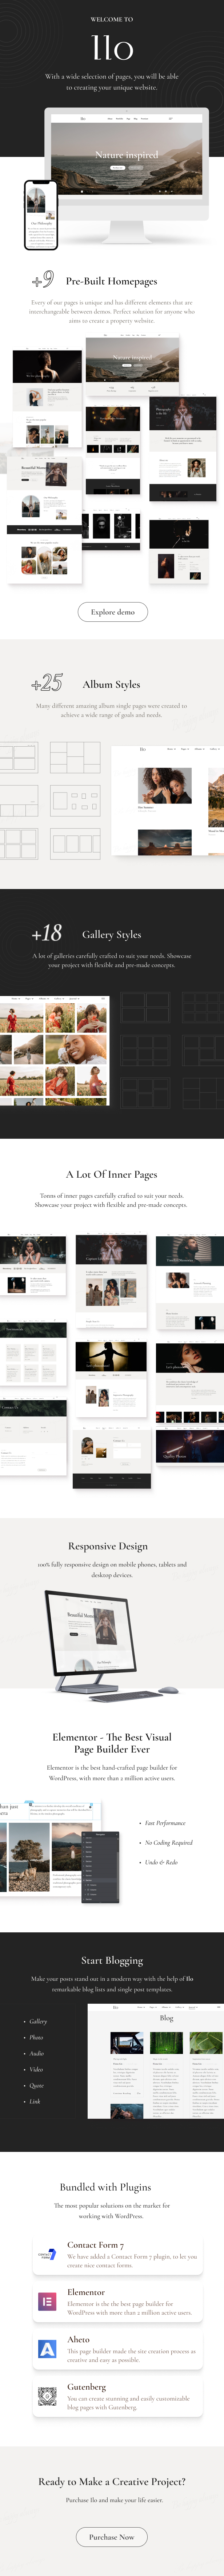 Ilo - Photography WordPress Theme - 1